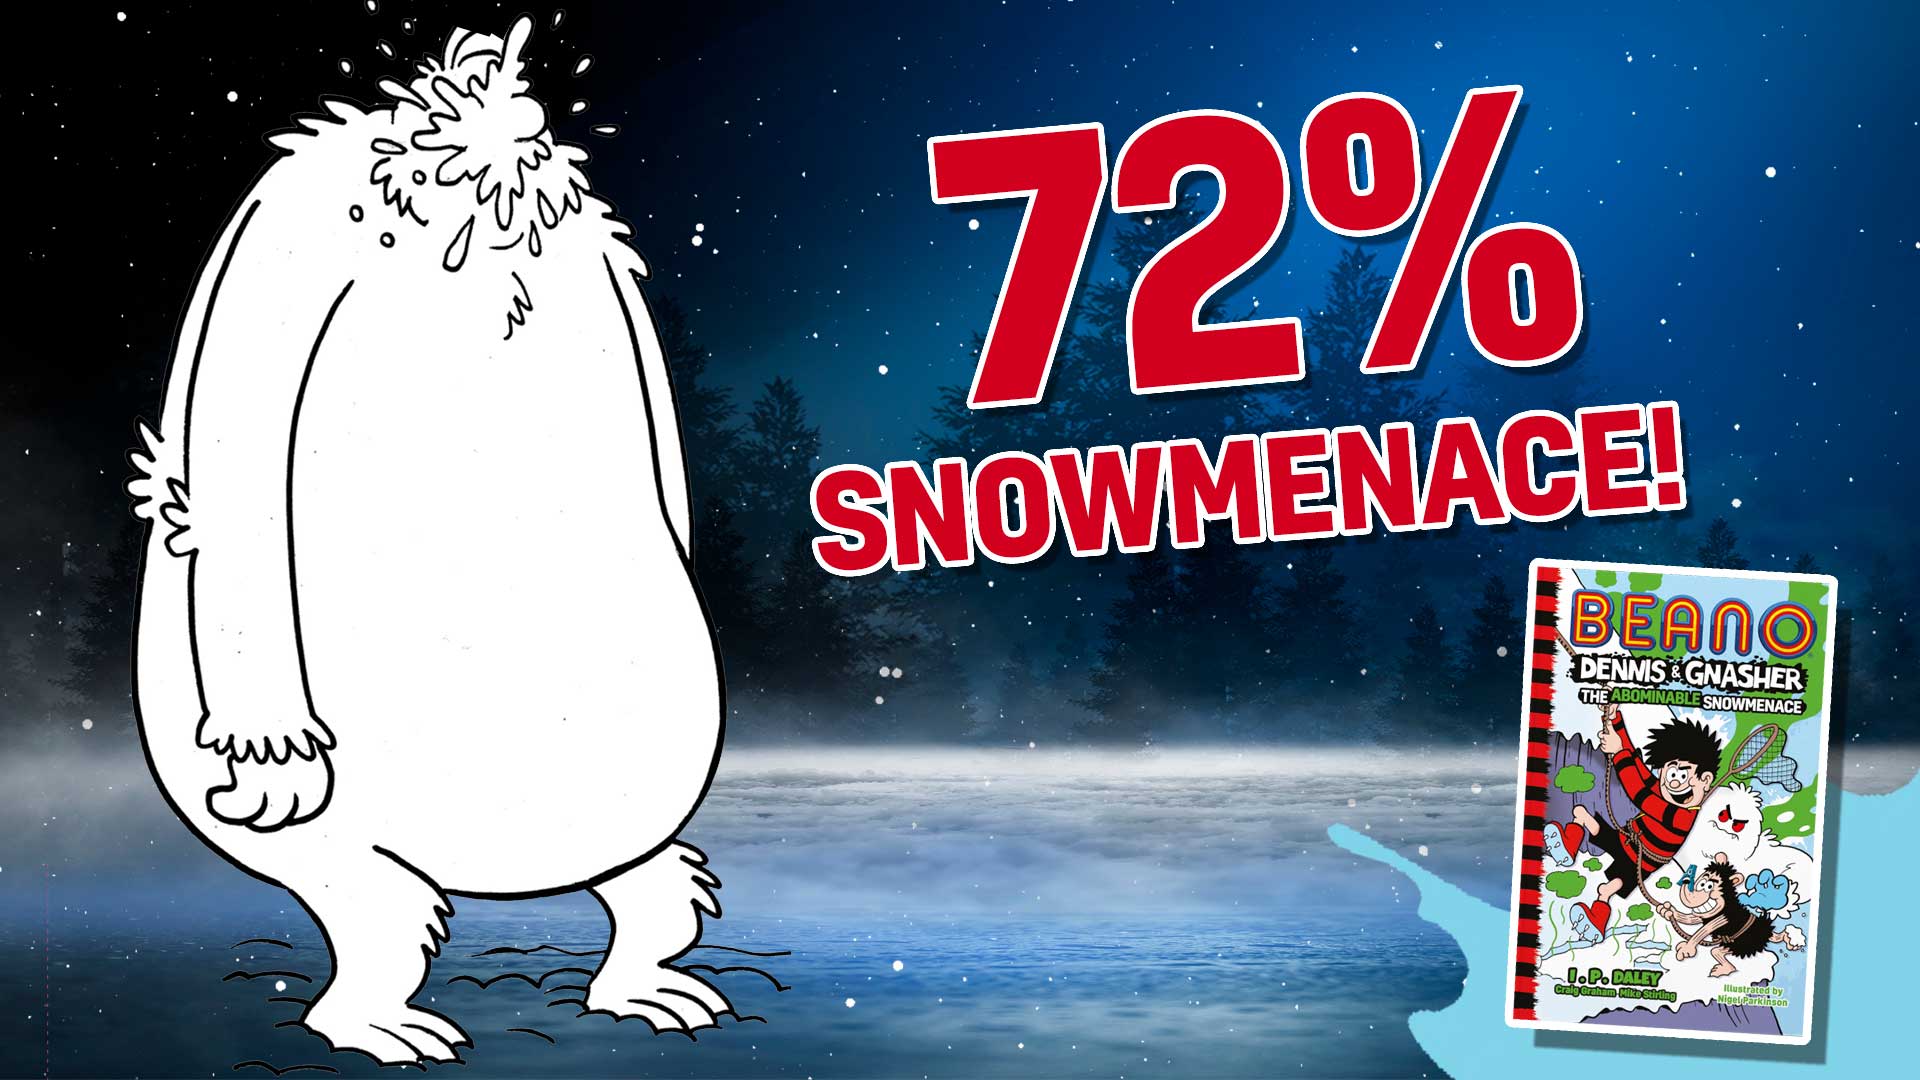 72 per cent Snowmenace